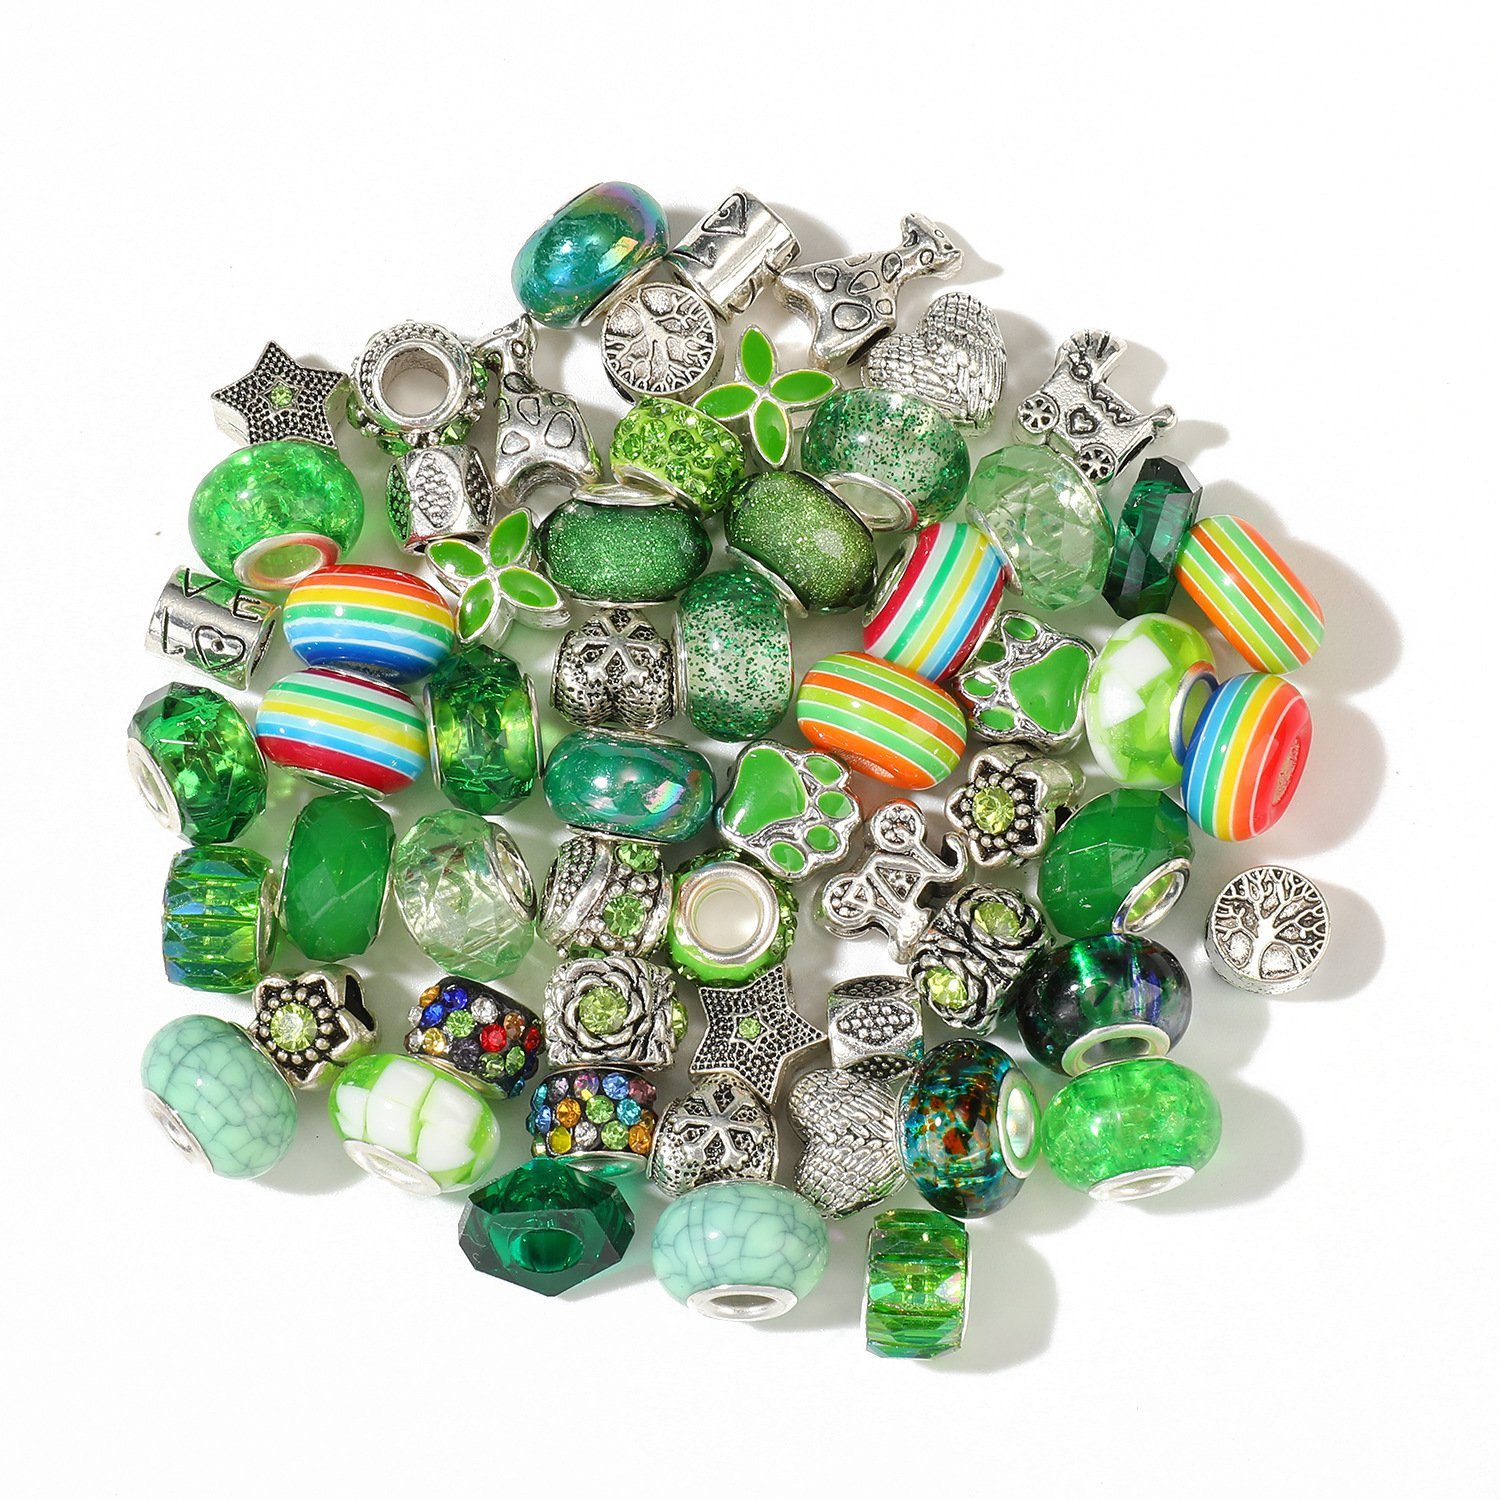 Kopper-24 Bastelperlen Großlochperlen Glasperlen Charm Mix mit 60 Perlen, Grün